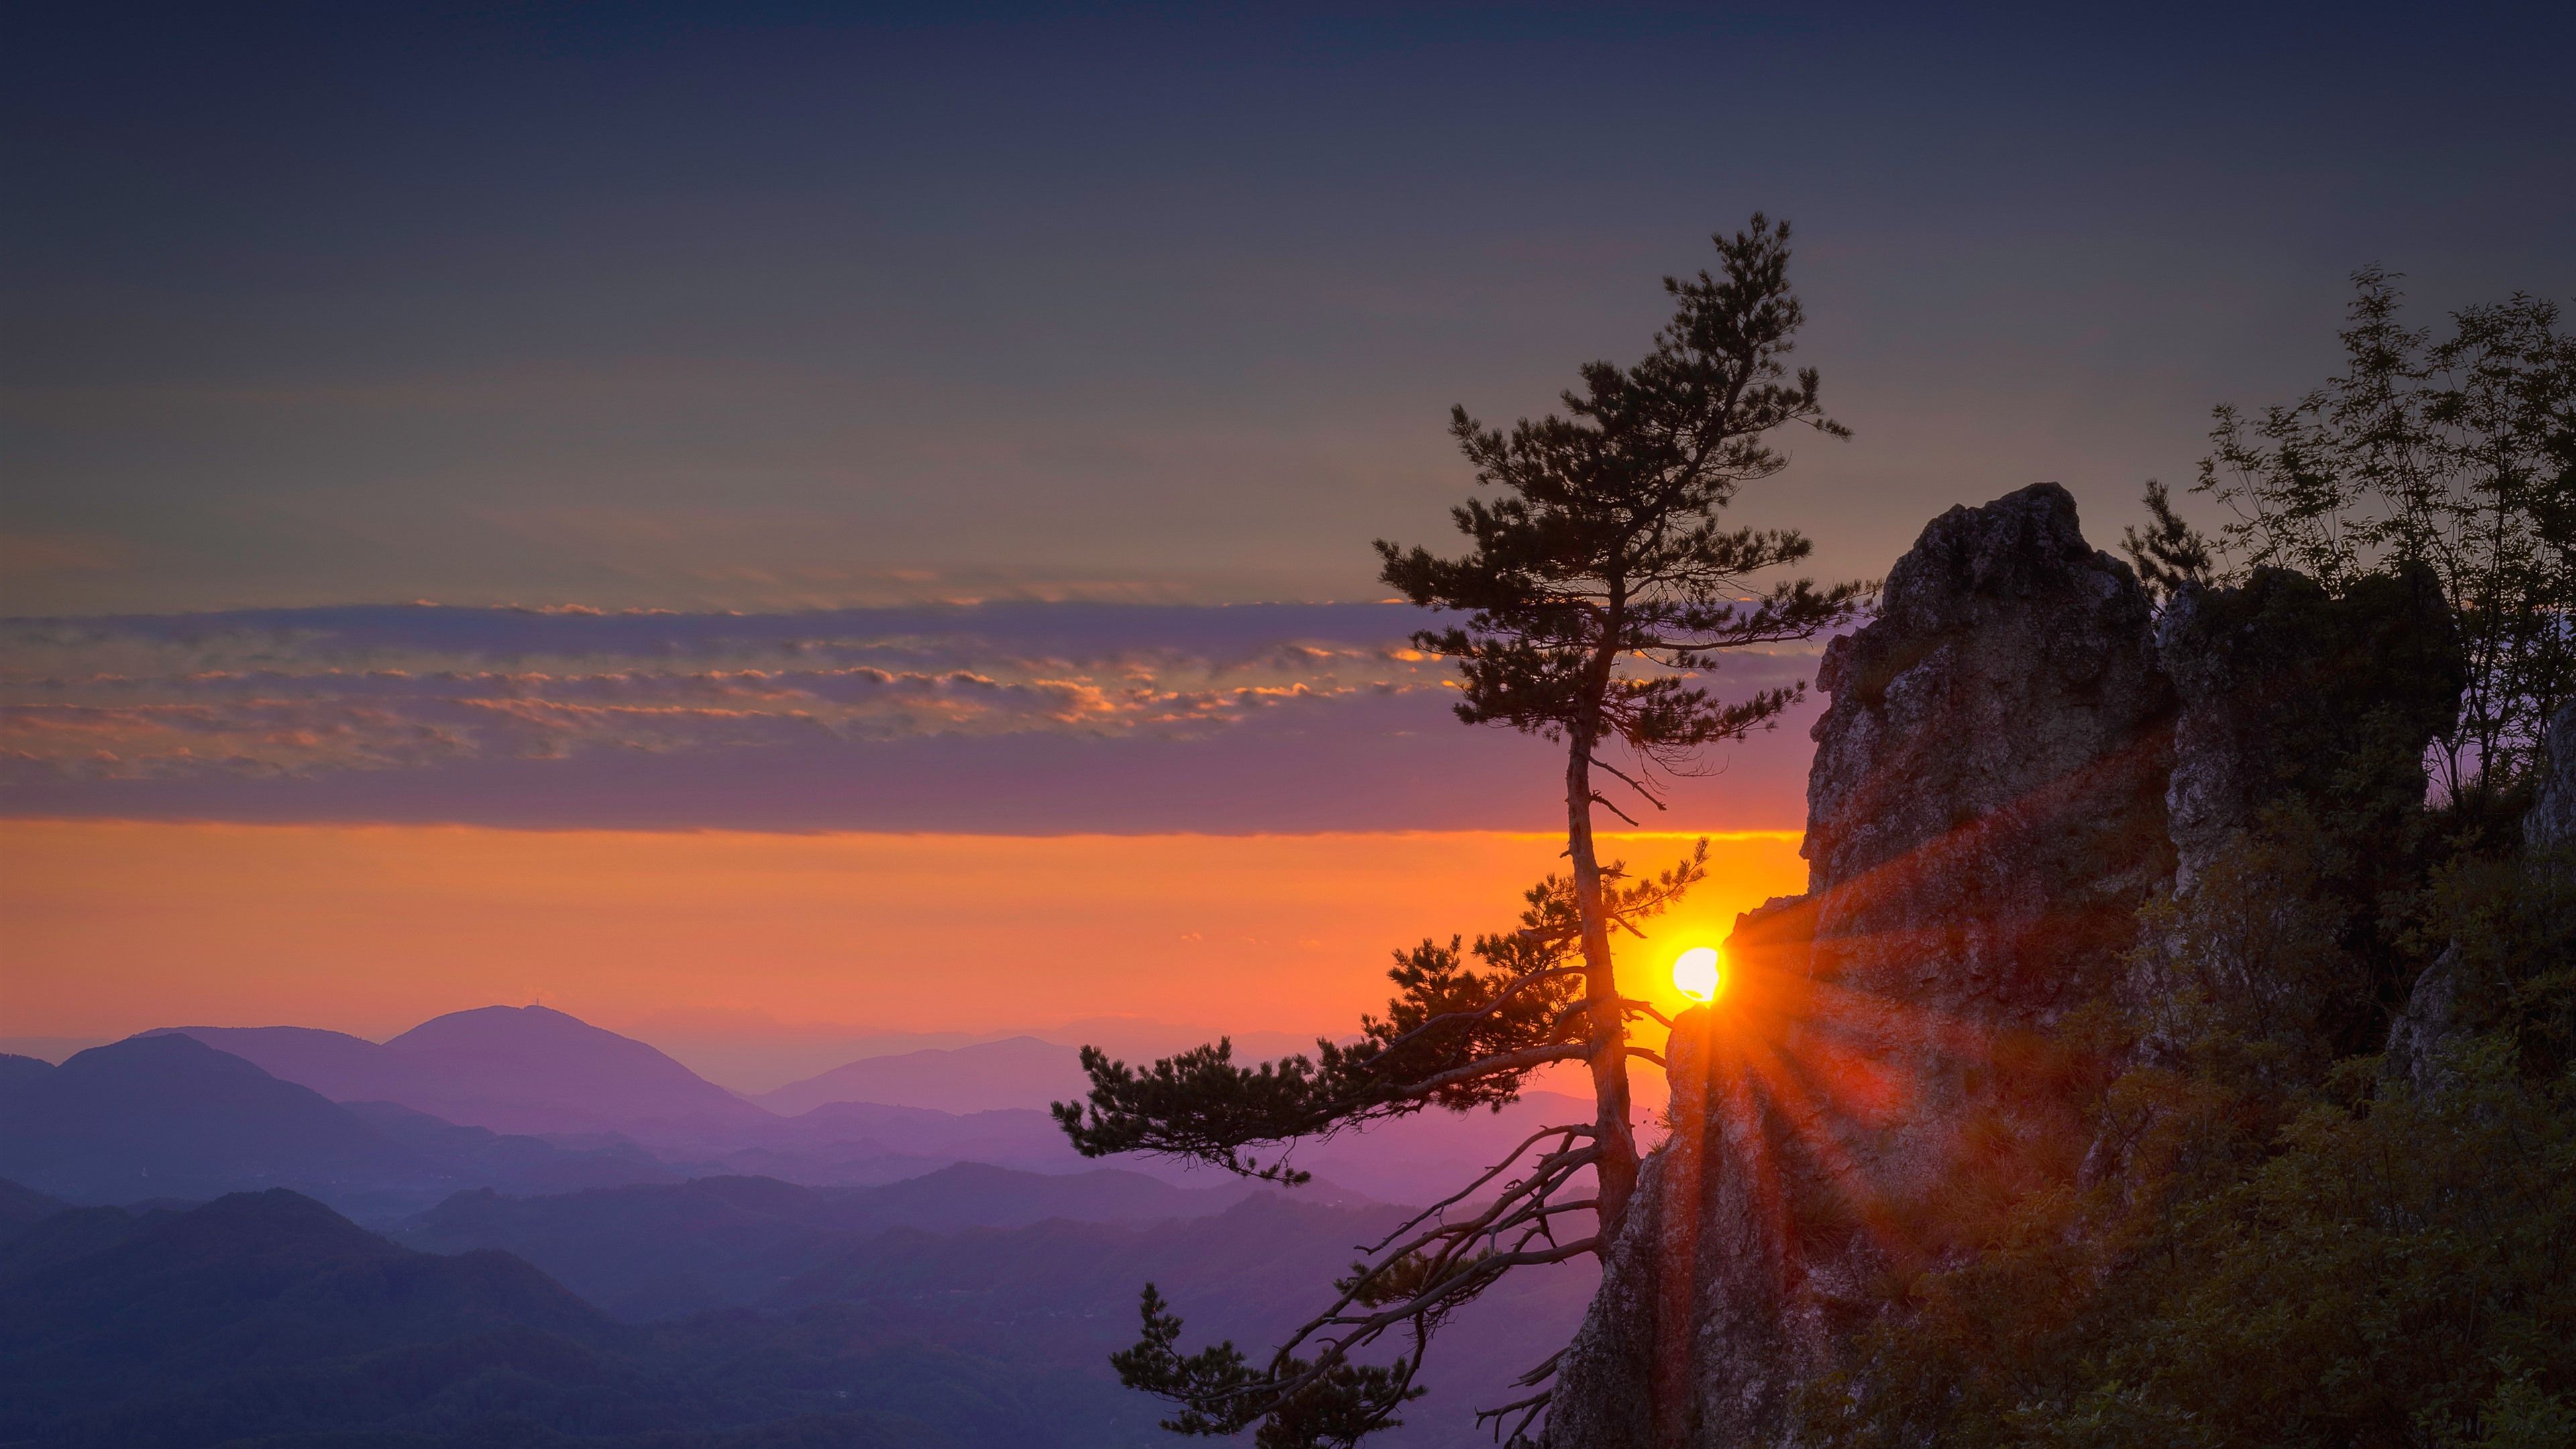 Wallpaper Mountain, cliff, tree, sun rays, sunrise, morning 5120x2880 UHD 5K Picture, Image